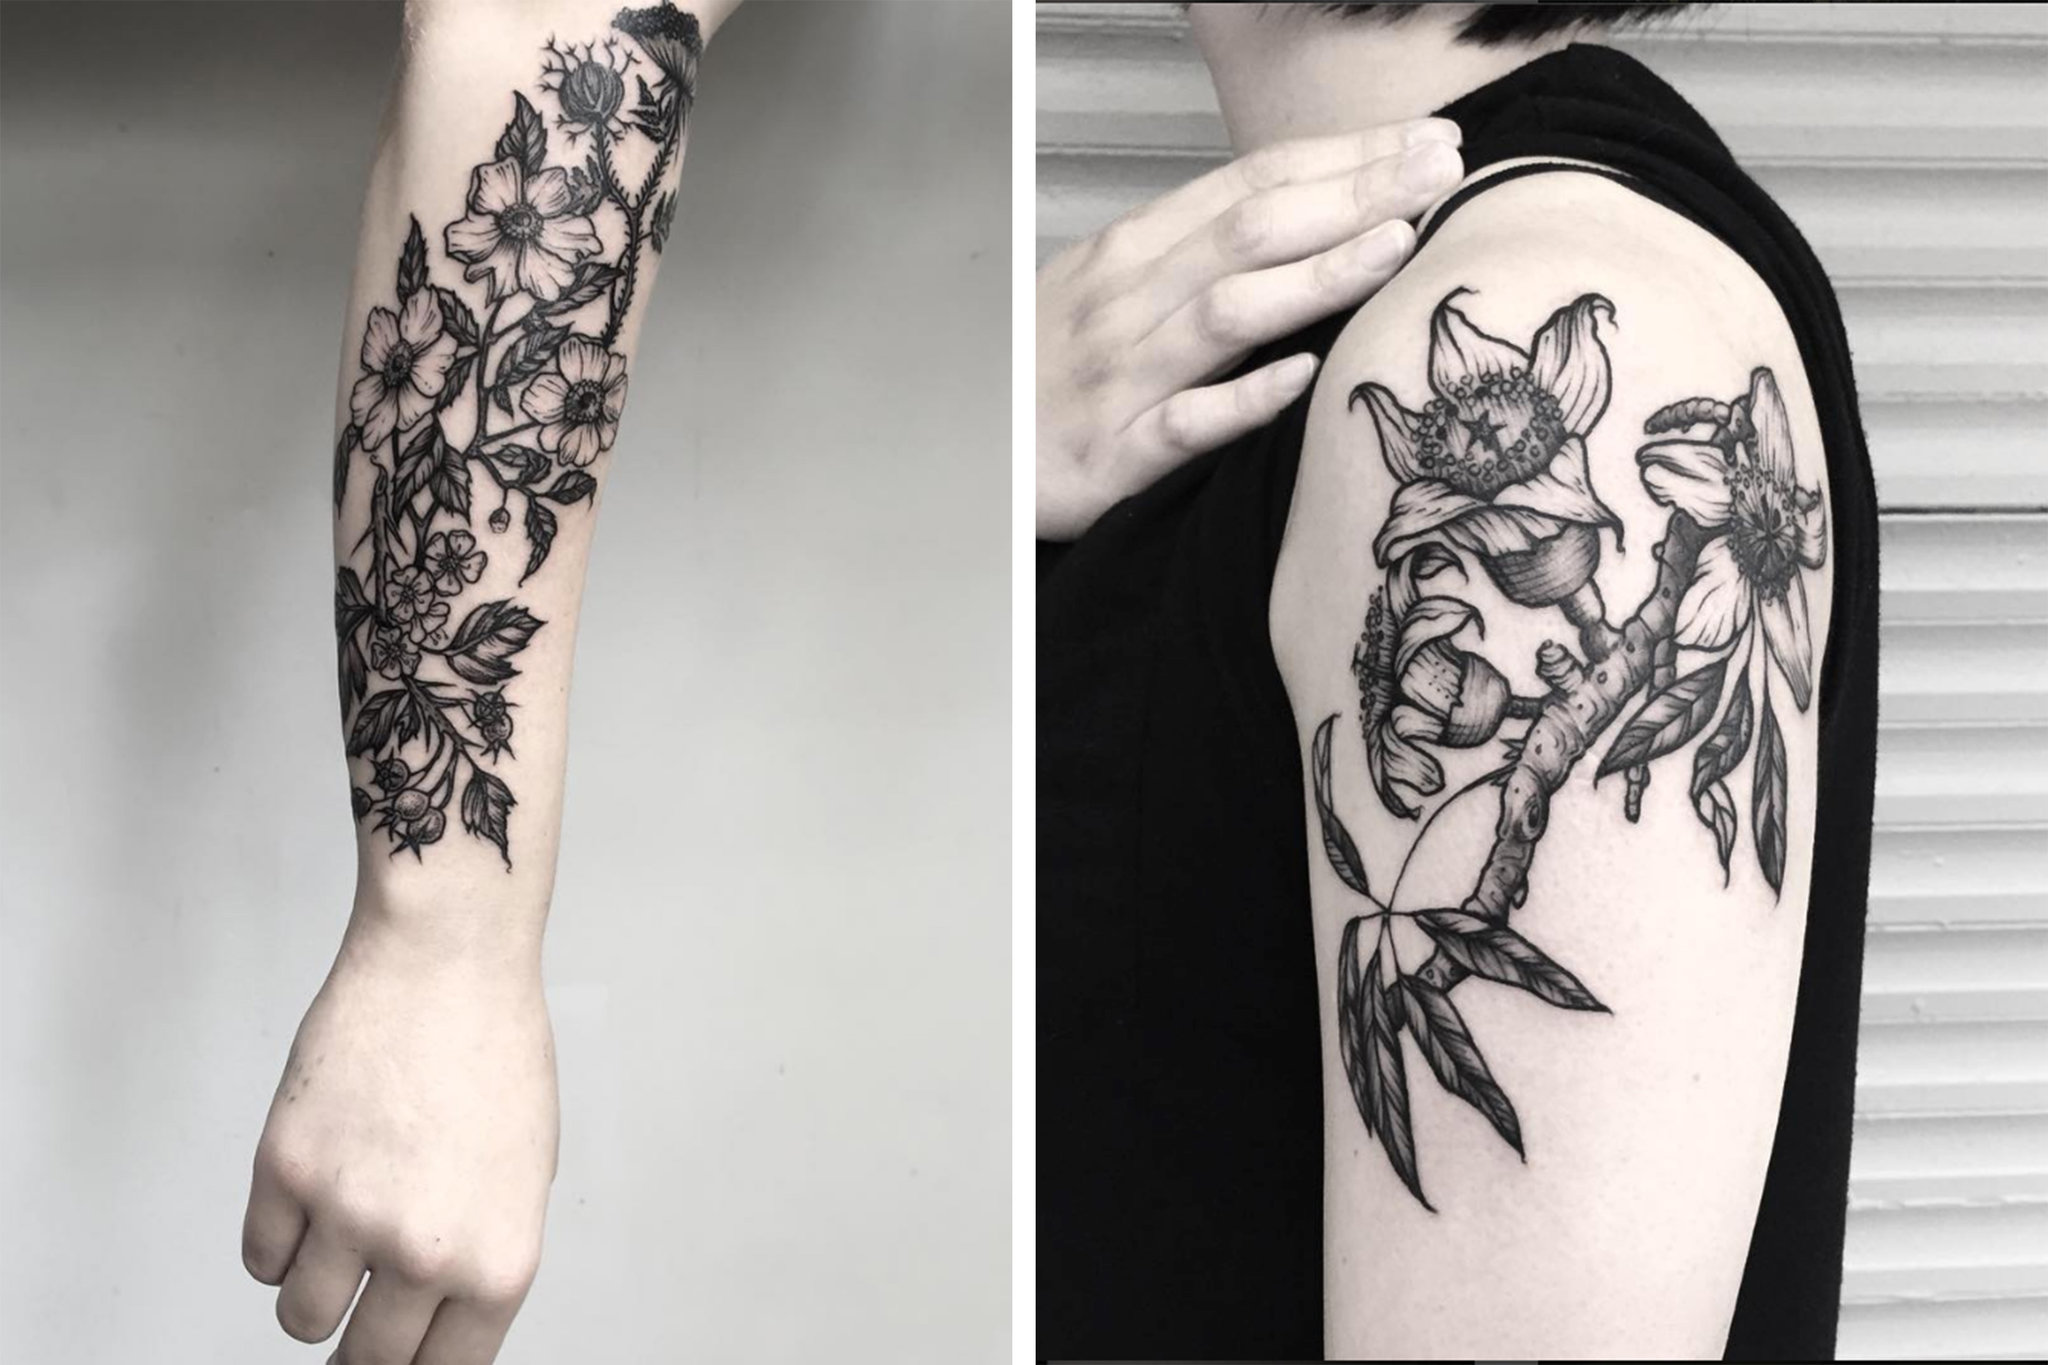 Floral Flourish: The Rise Of Botanical Tattoos